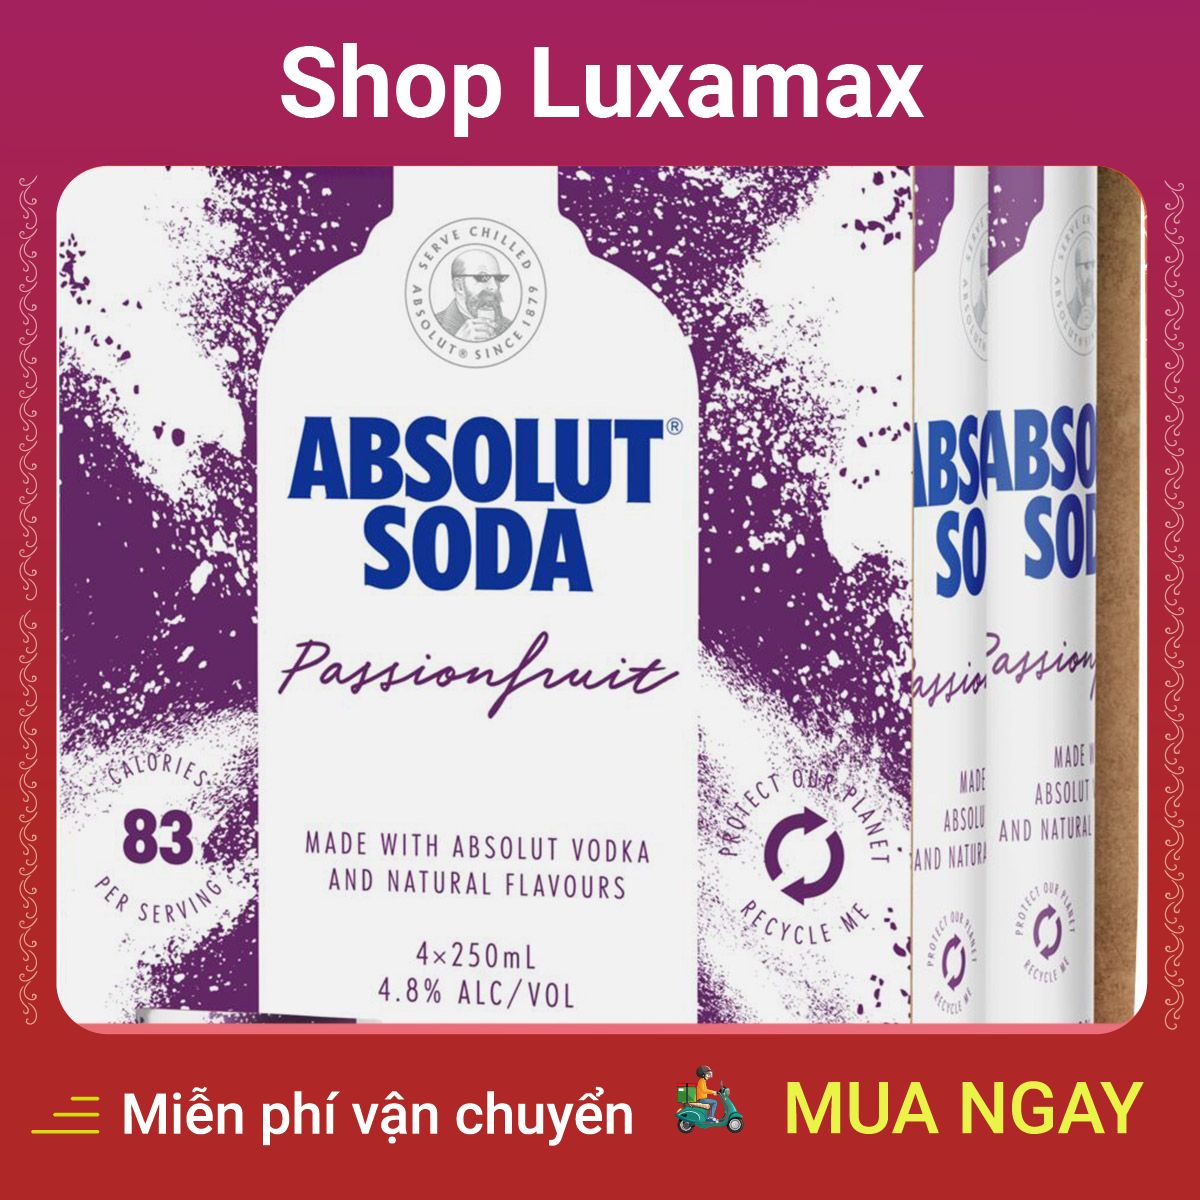 Lốc 4 lon đồ uống có cồn hương chanh dây Absolut Soda Passionfruit (250ml/lon) DTK146764551 - Shop LuxaMax - Lot 4 cans of drinking beverages lemon lemon wire absolut soda passionfruit (250ml / cans)